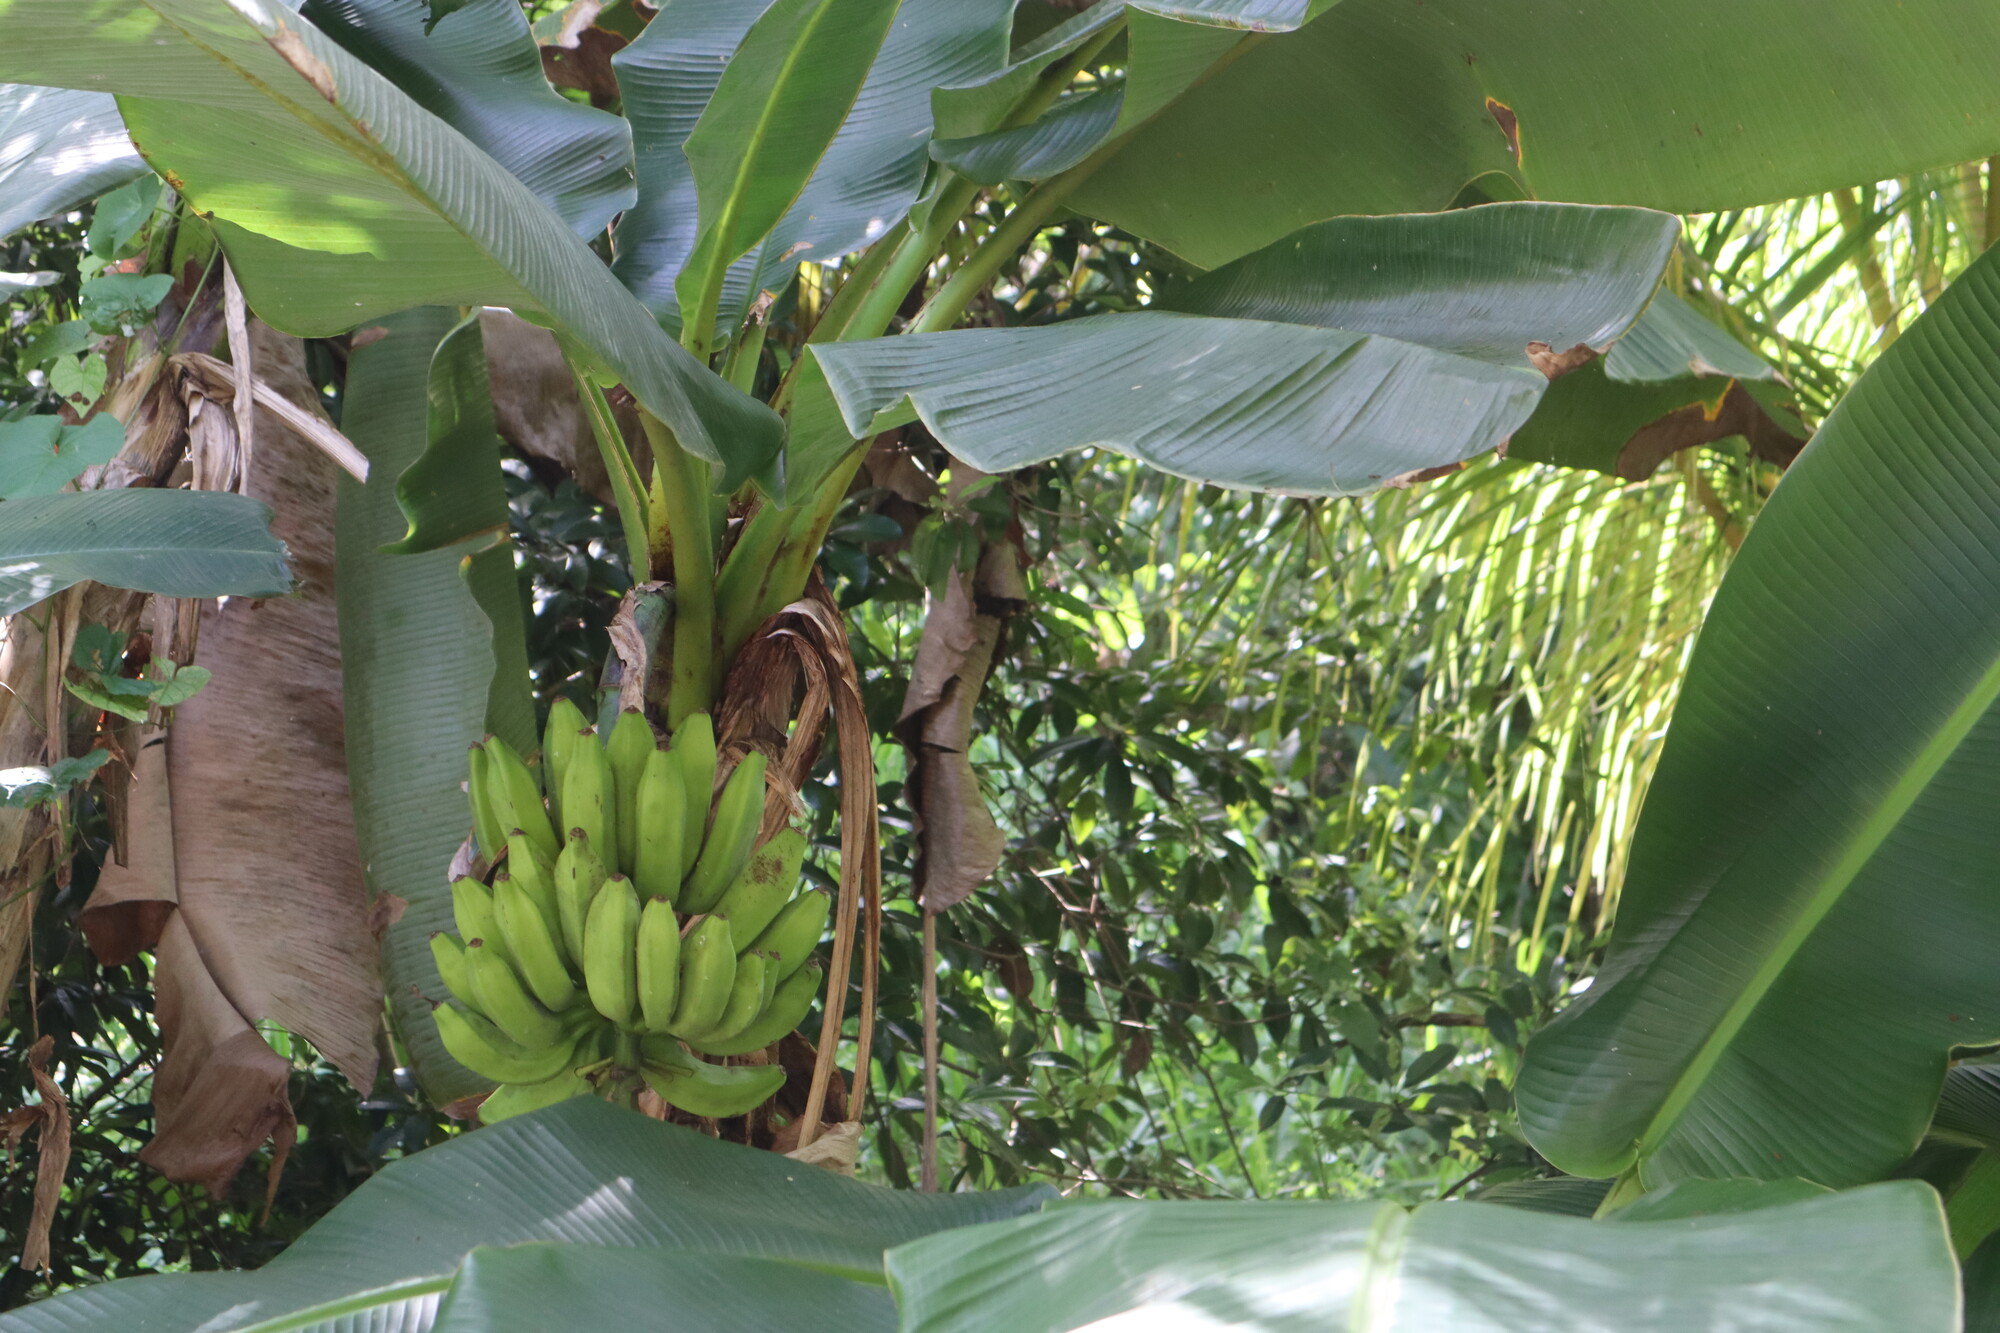 Bananas growing on a tree